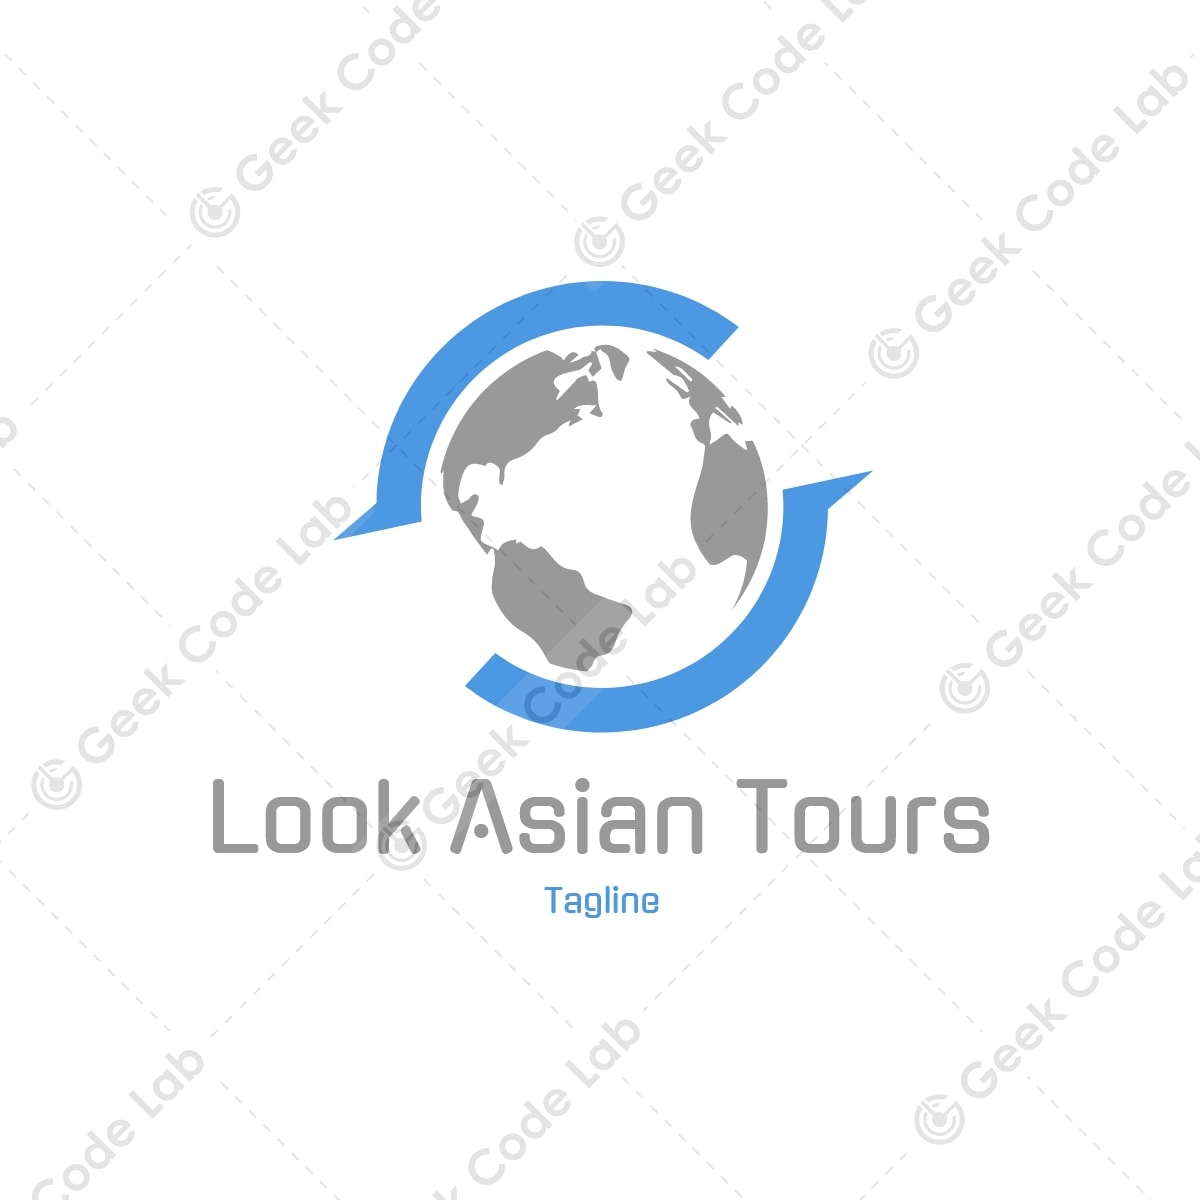 Look Asian Tours